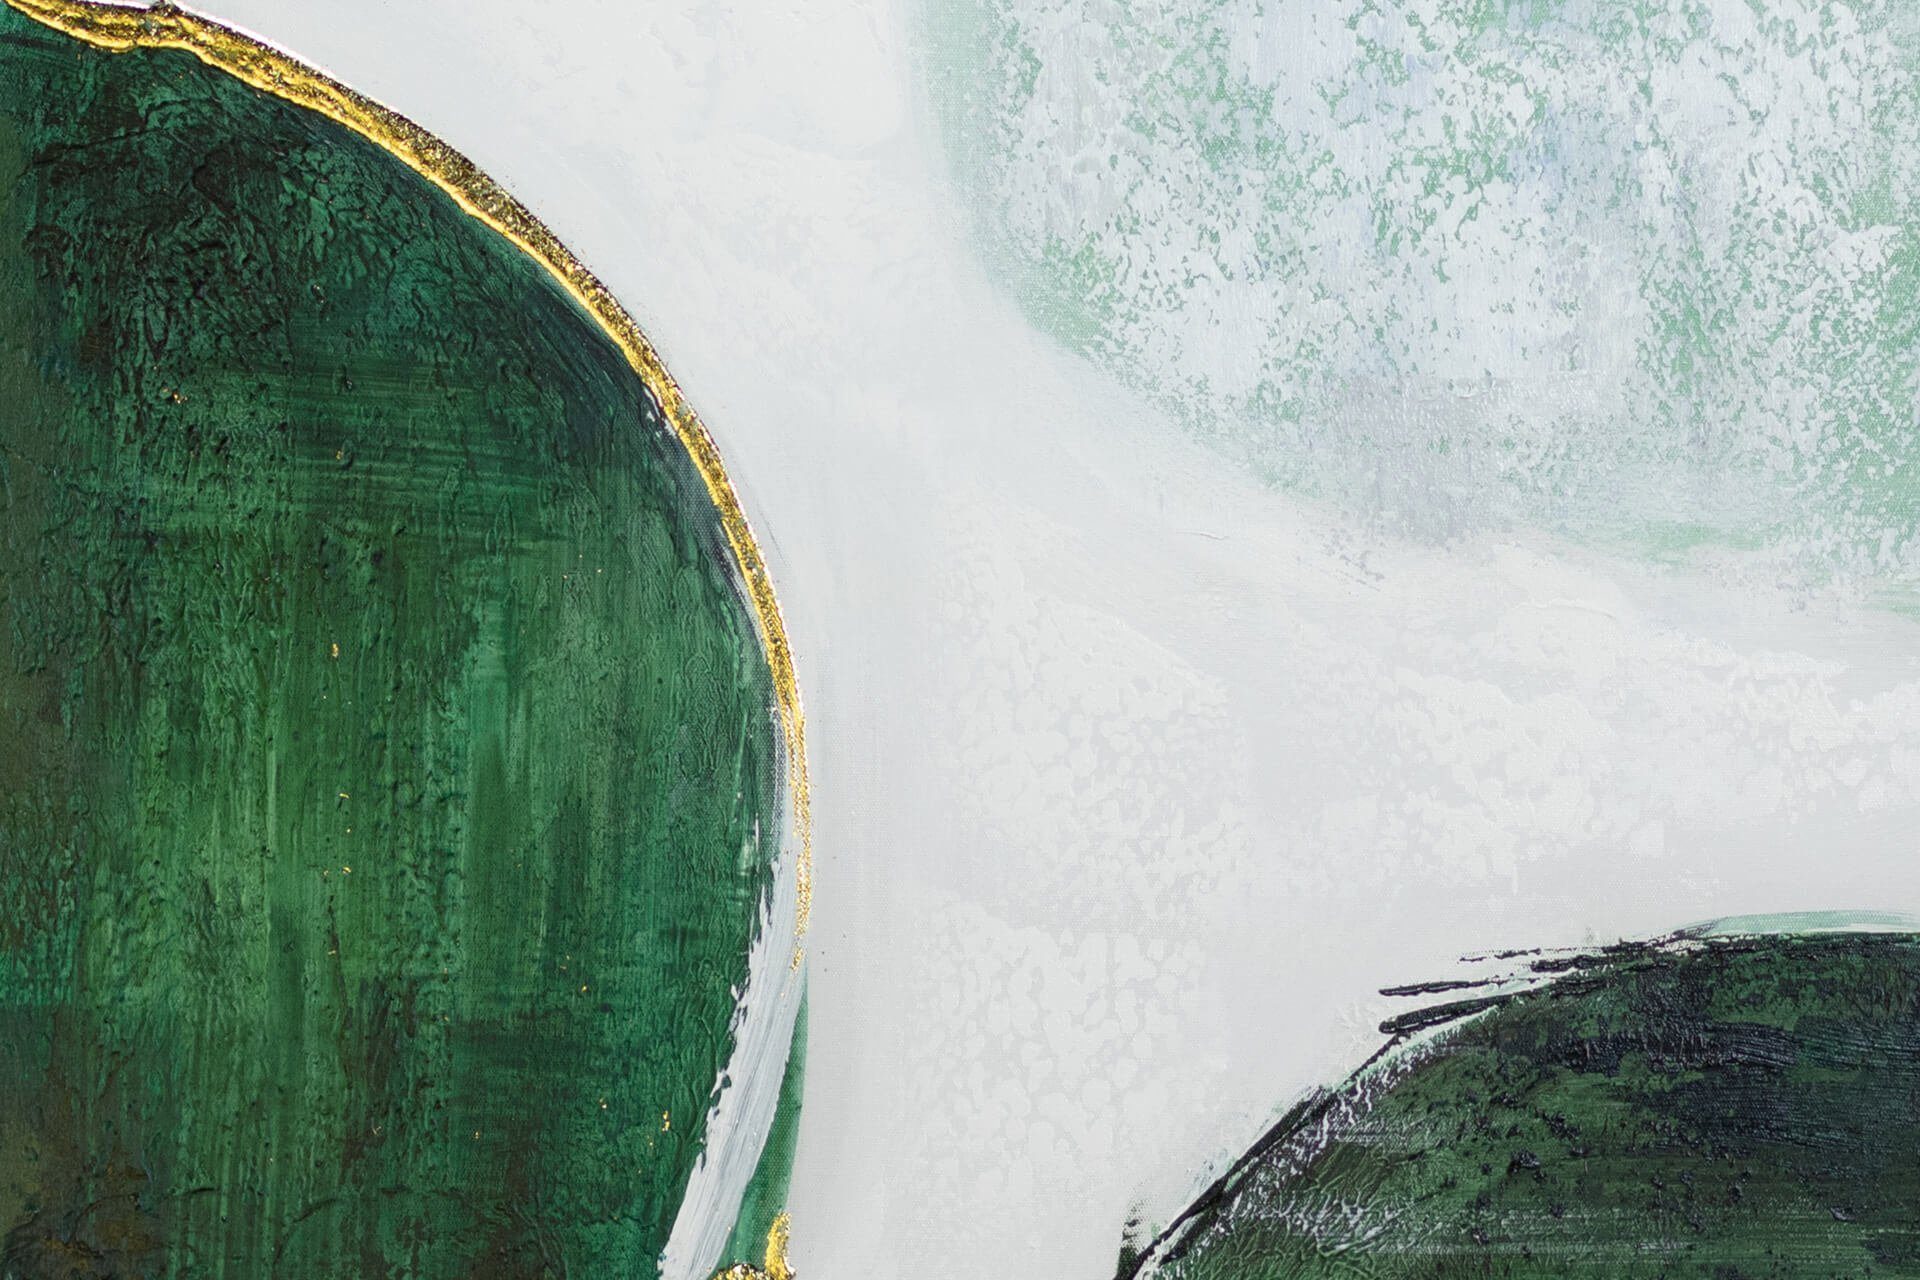 cm, Wohnzimmer HANDGEMALT Leinwandbild Gemälde Wandbild Green KUNSTLOFT 60x90 Continents 100%